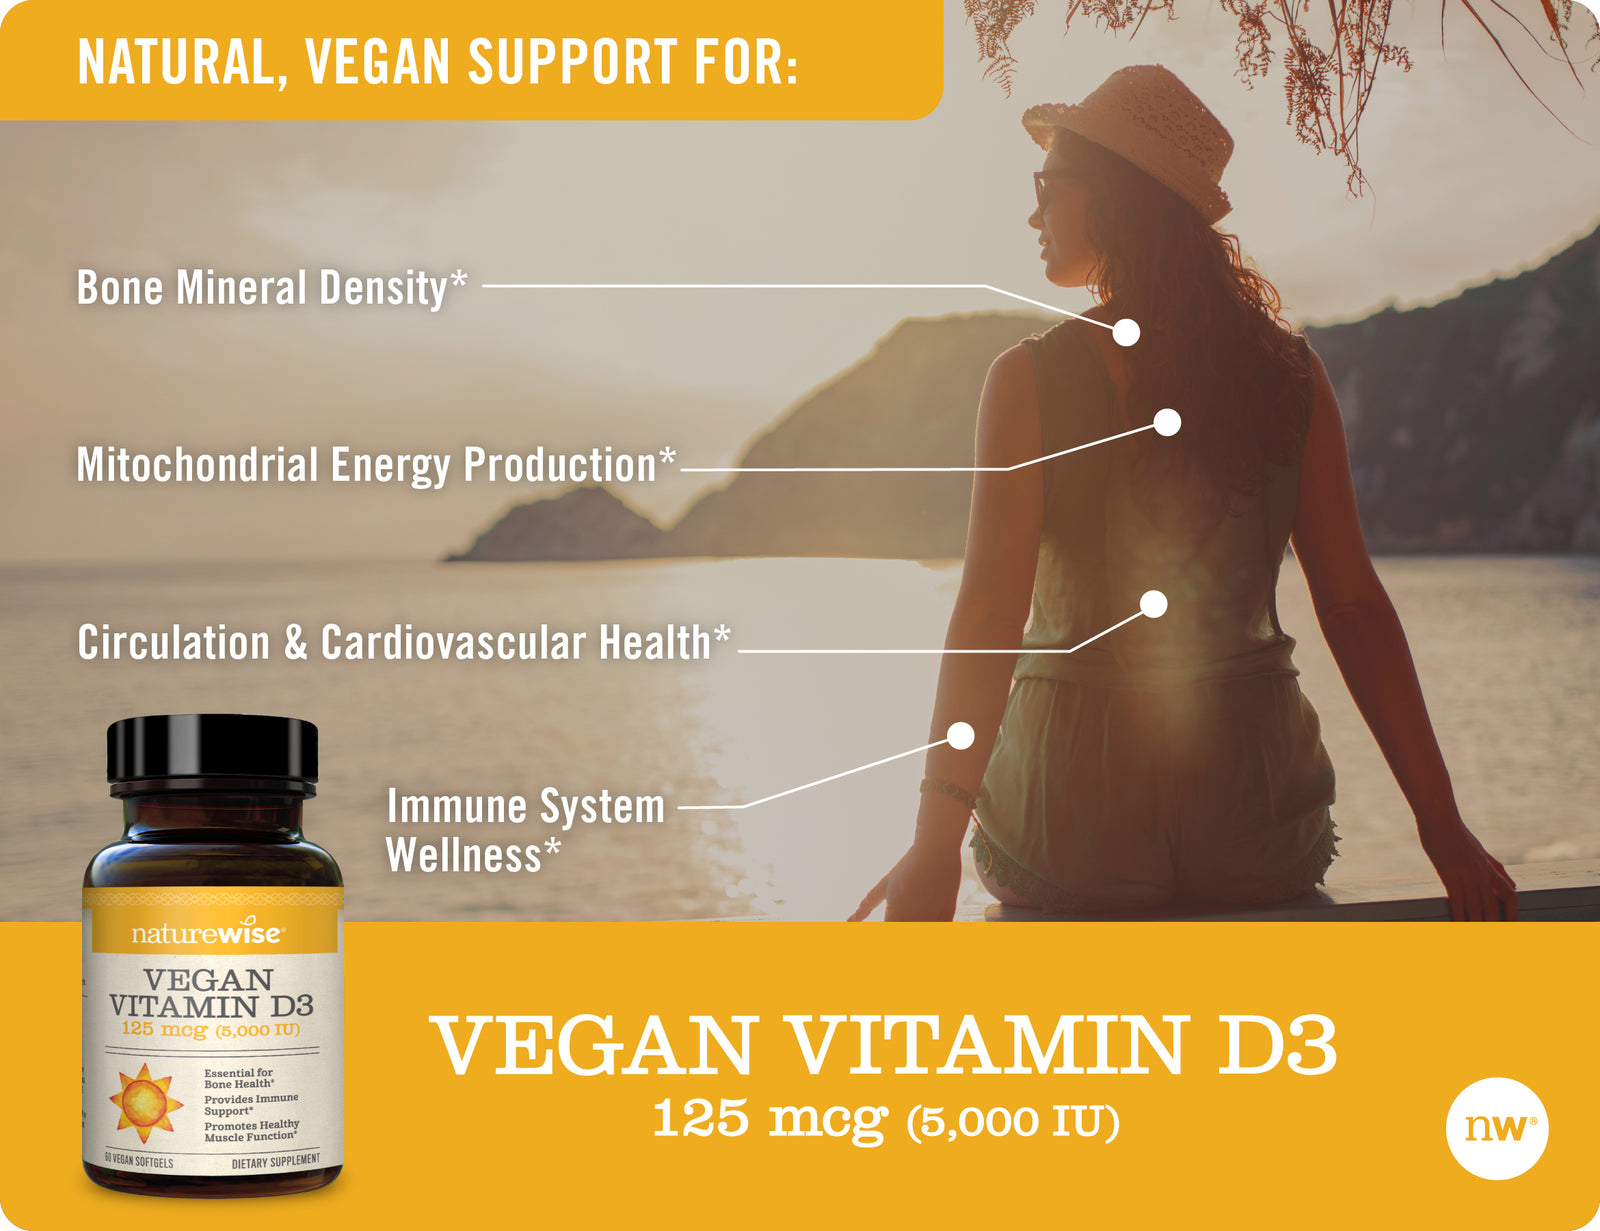 Vegan Vitamin D3 5,000 IU benefits 